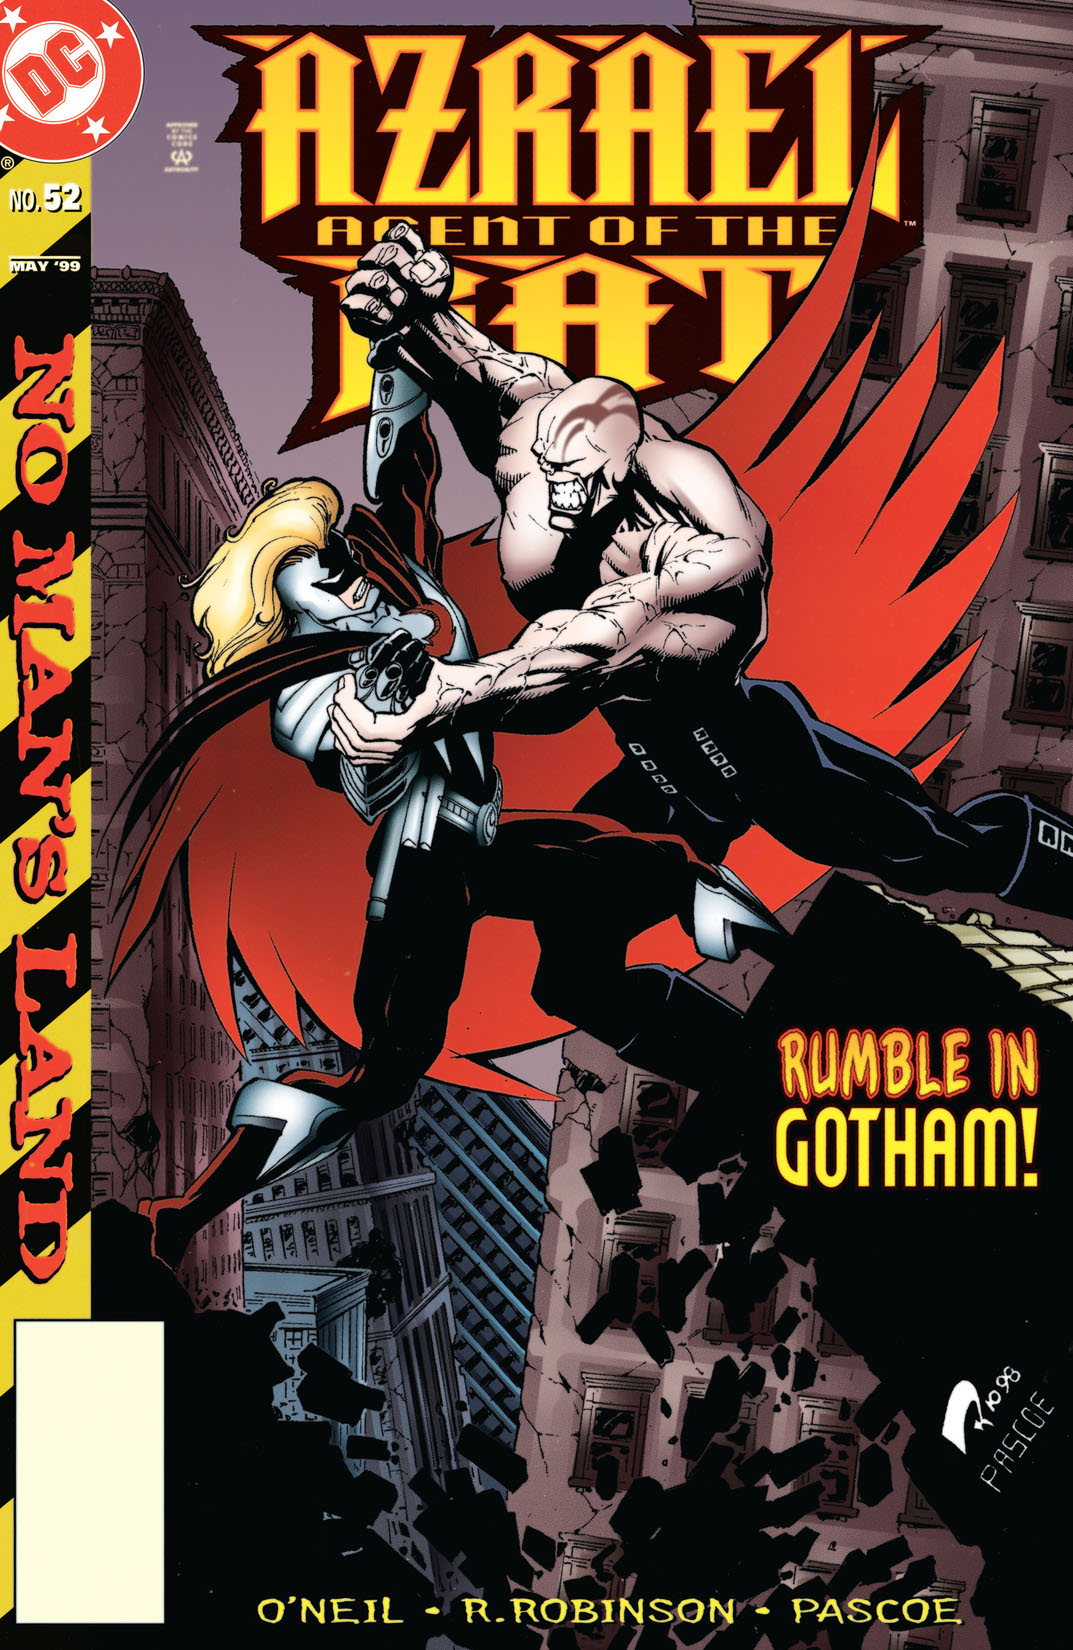 Azrael: Agent of the Bat #52 preview images